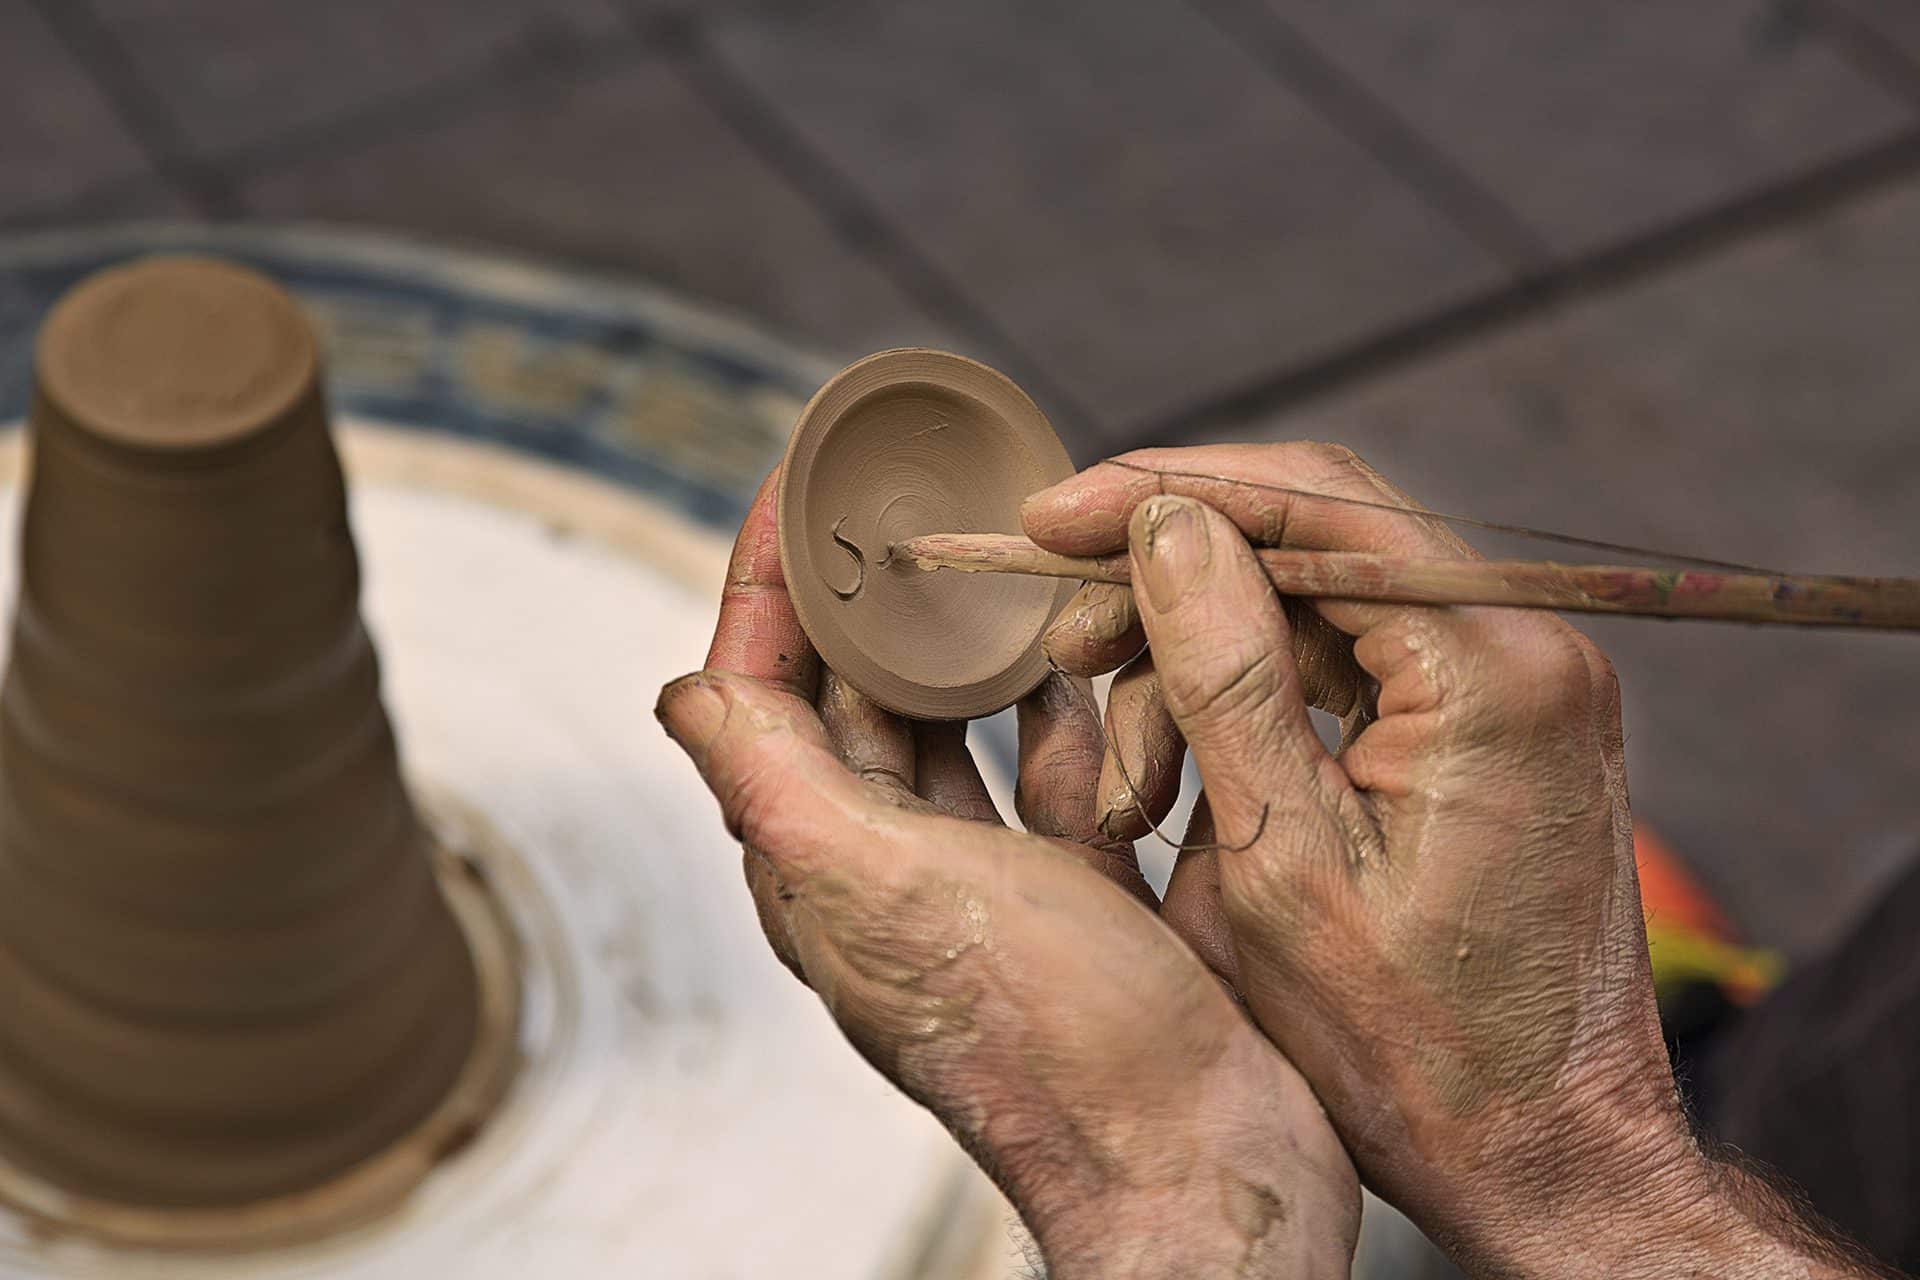 arthritis while doing pottery